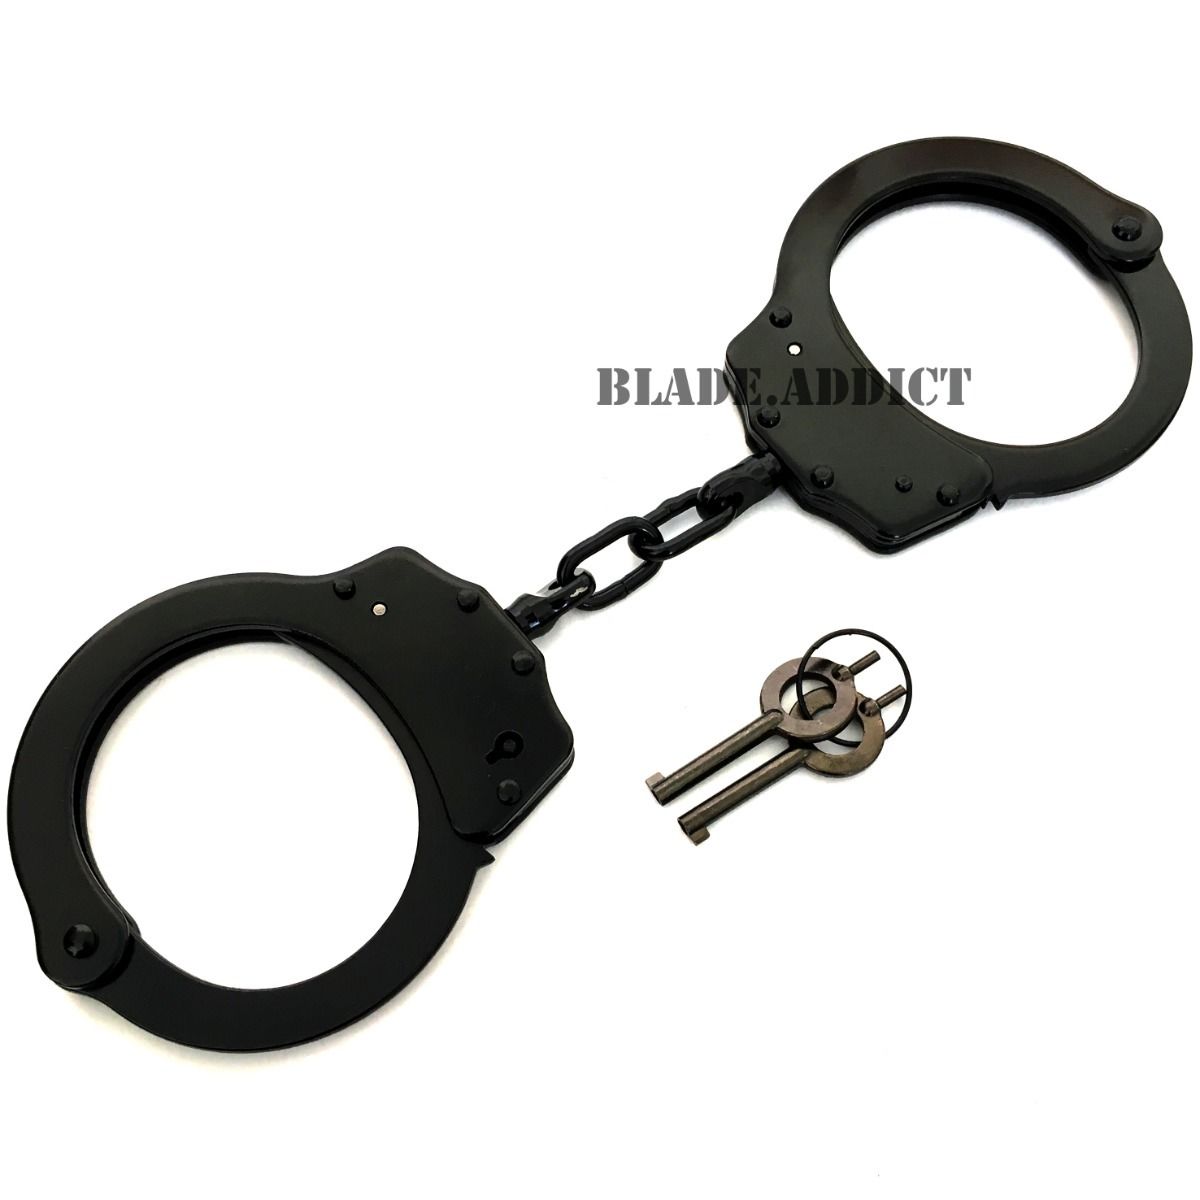 Professional Double Lock Black Steel Police Handcuffs w/ Keys Authentic Combat